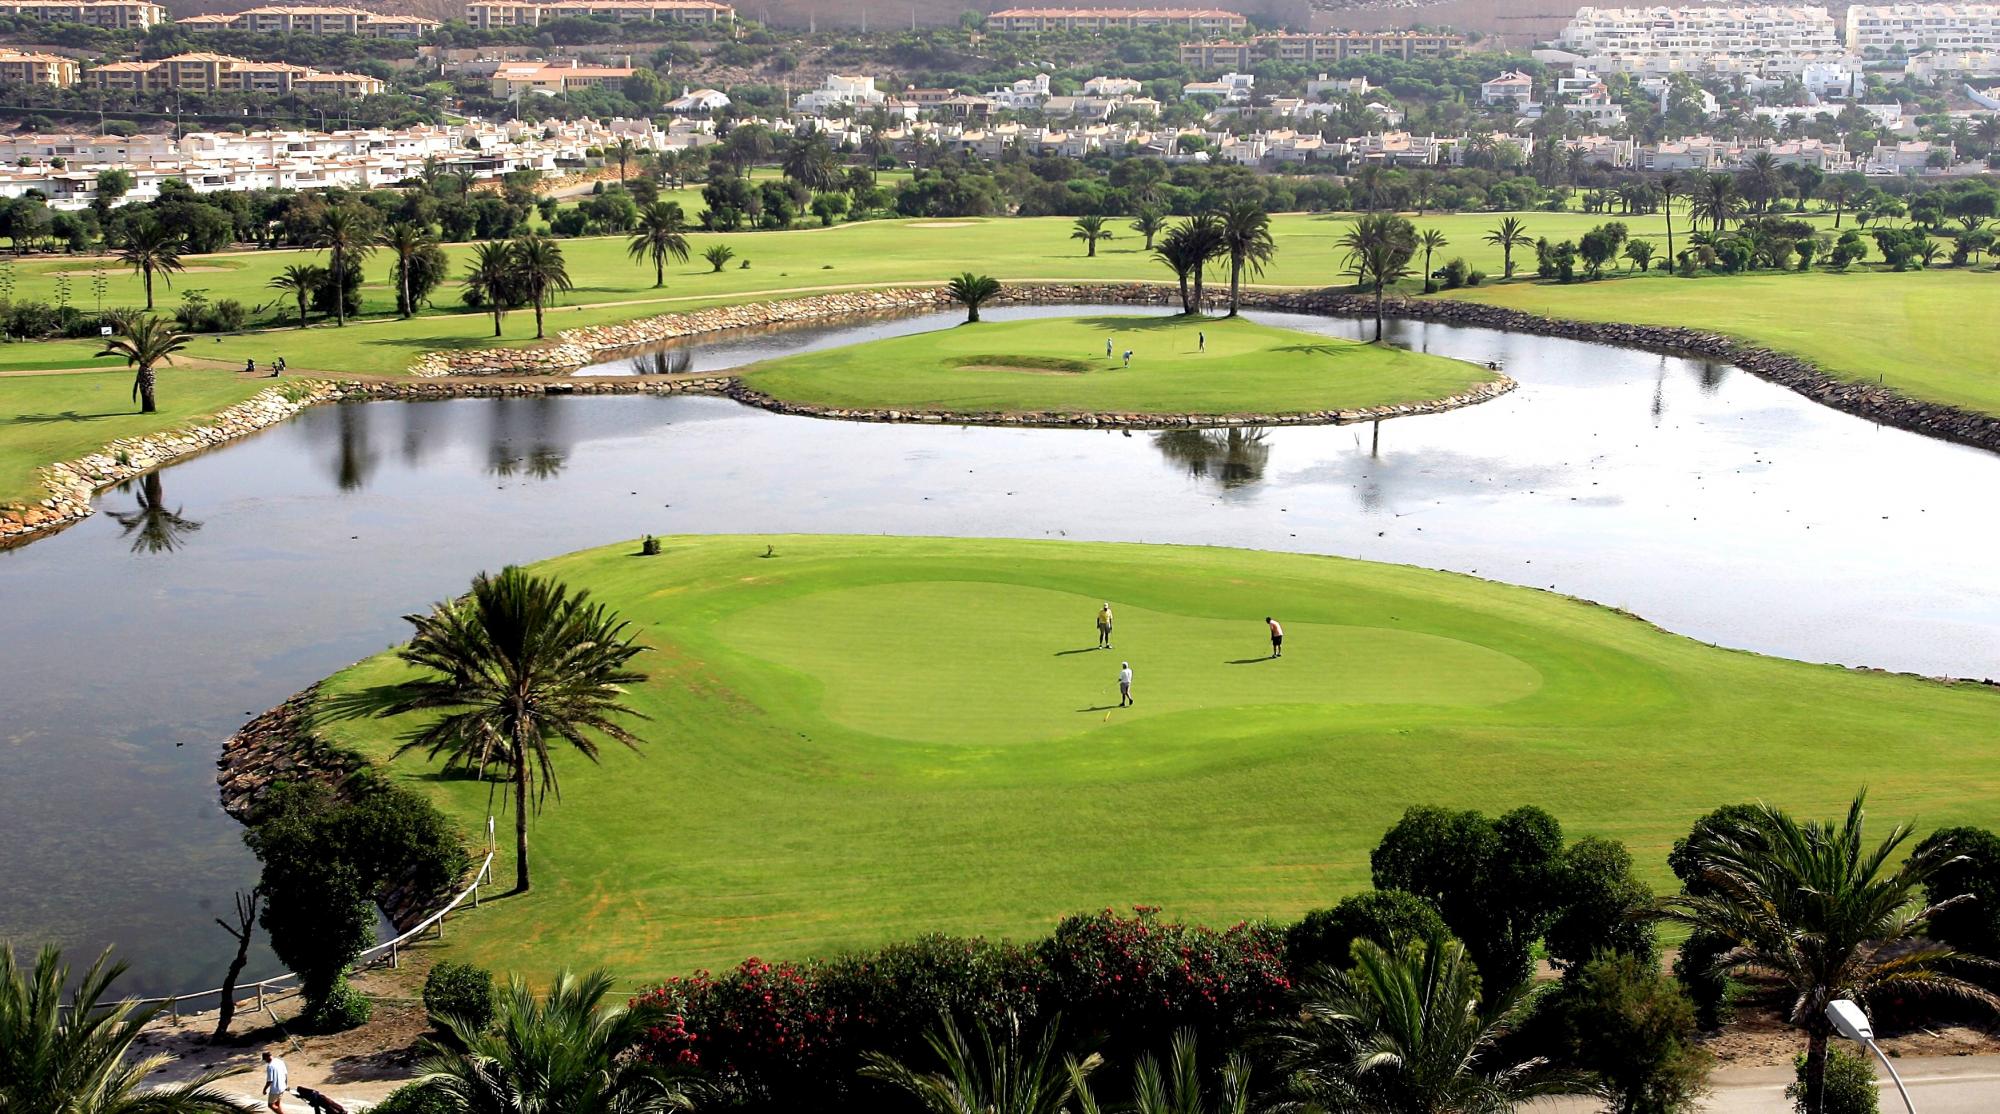 The Almerimar Golf Club's picturesque golf course situated in impressive Costa Almeria.